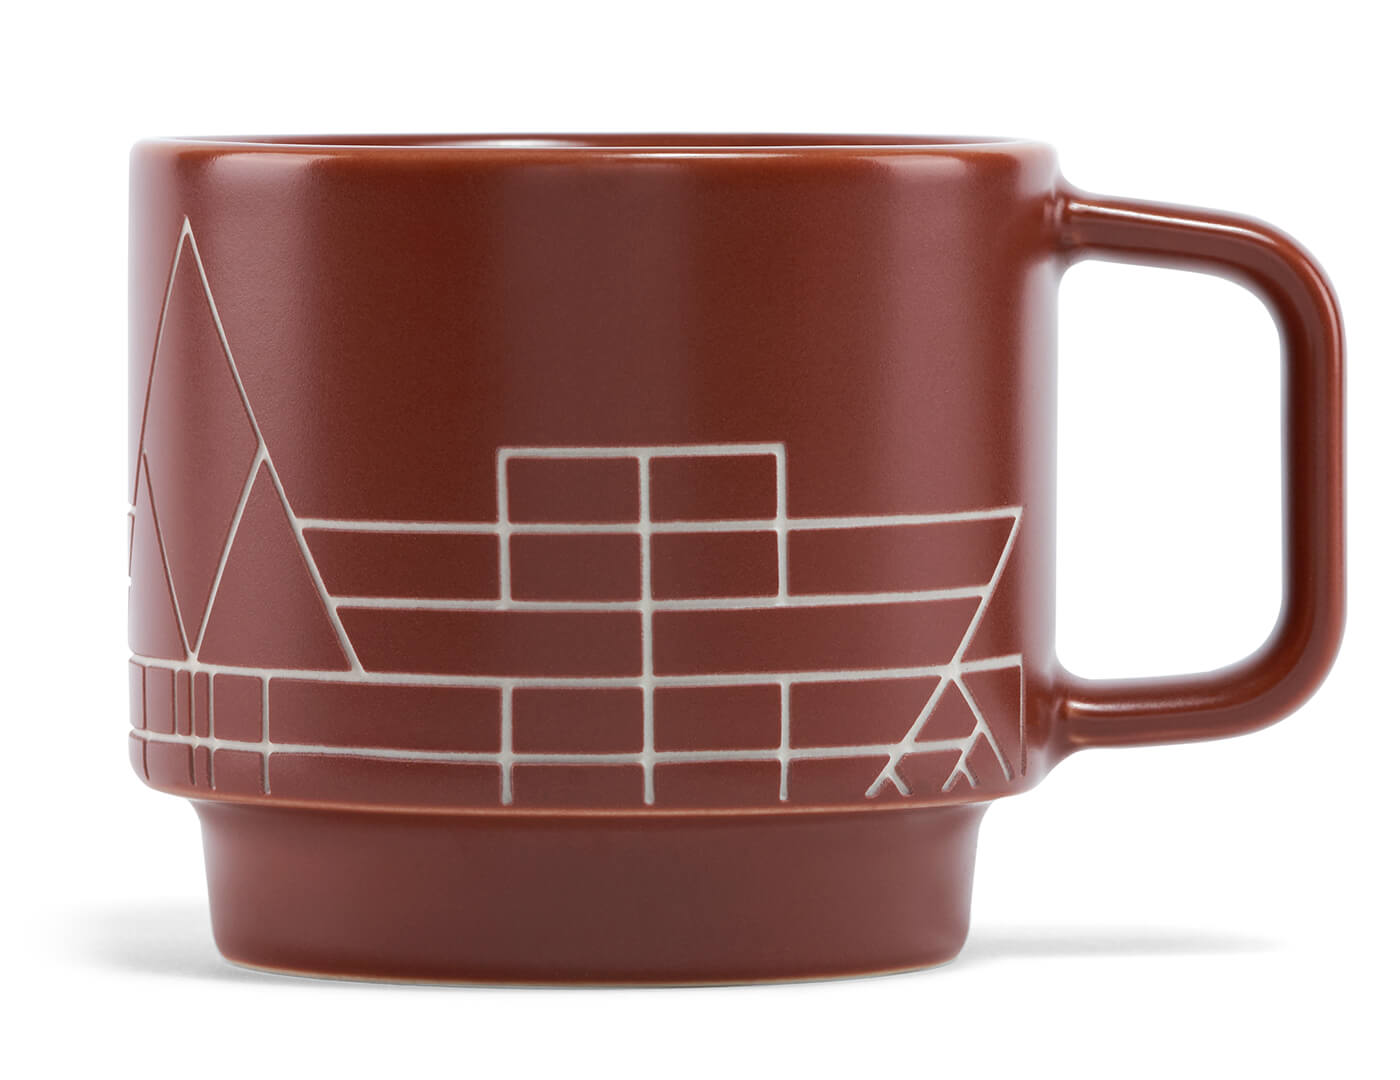 Frank Lloyd Wright Gift Set, teacup